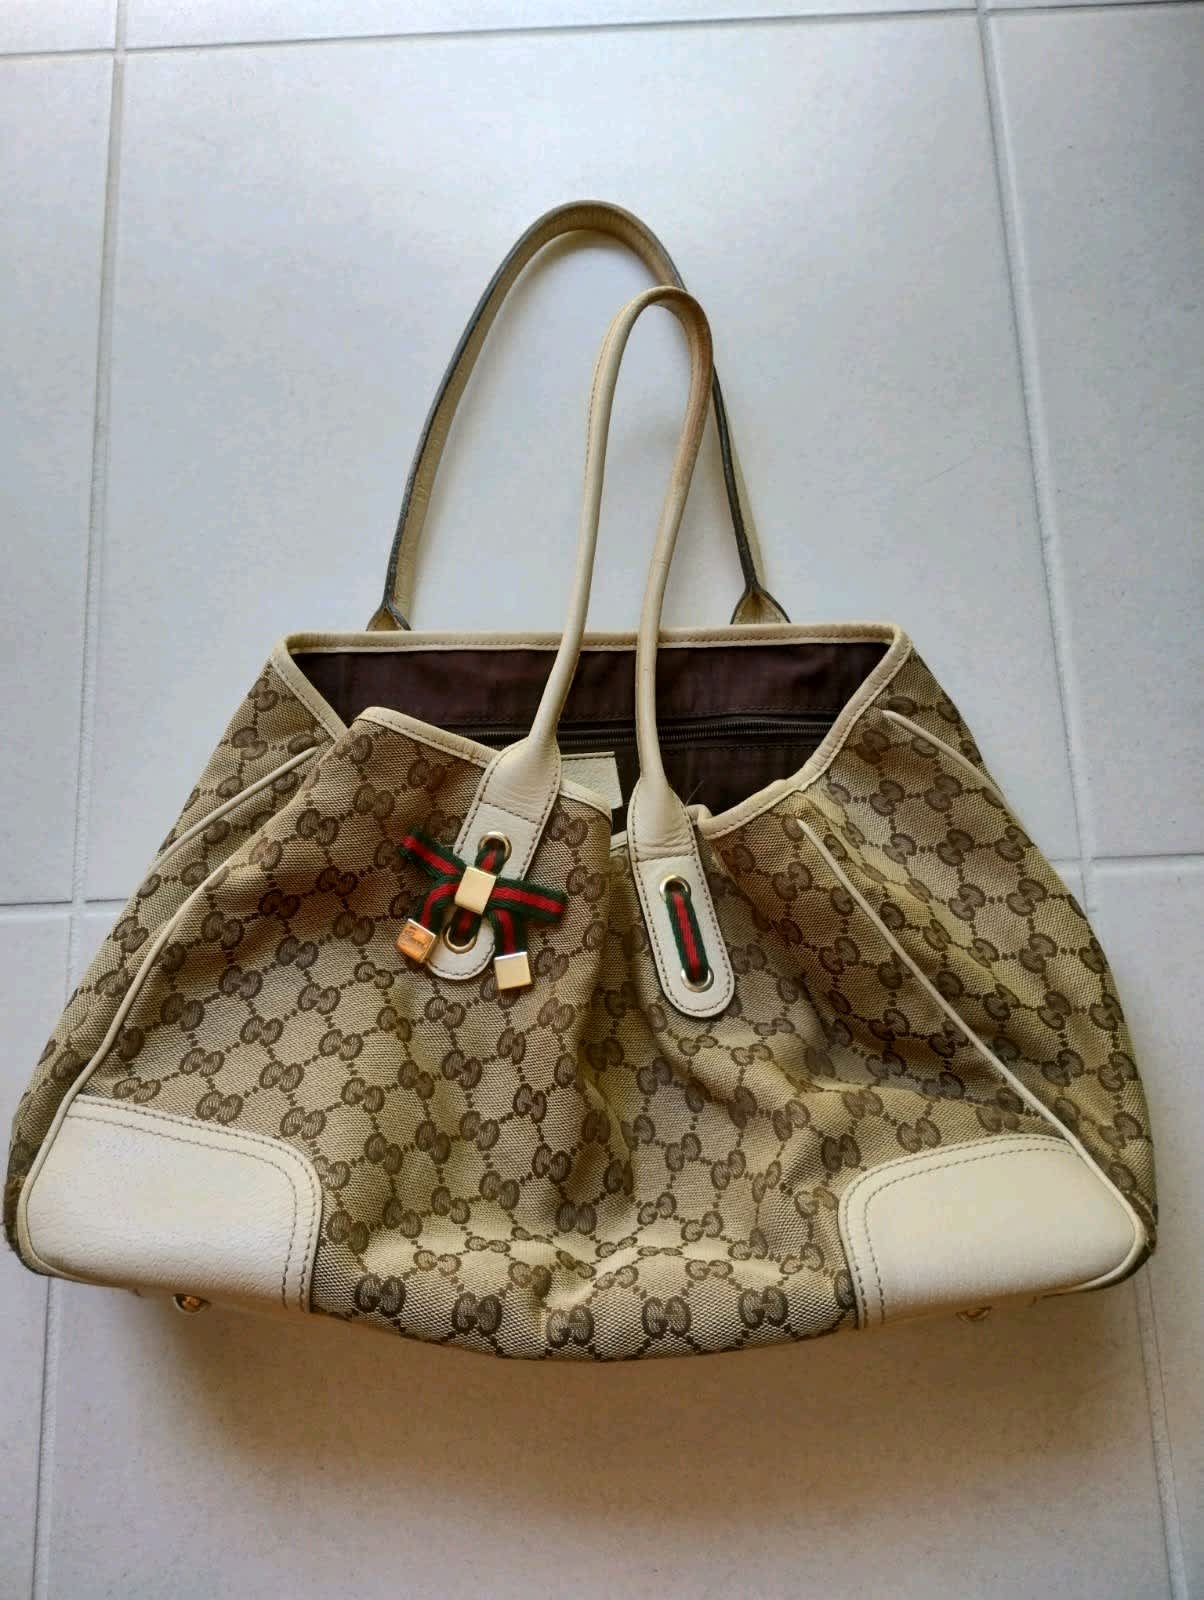 Meghashop on X: Buy Affordable and Designer Fendi #Bags Australia